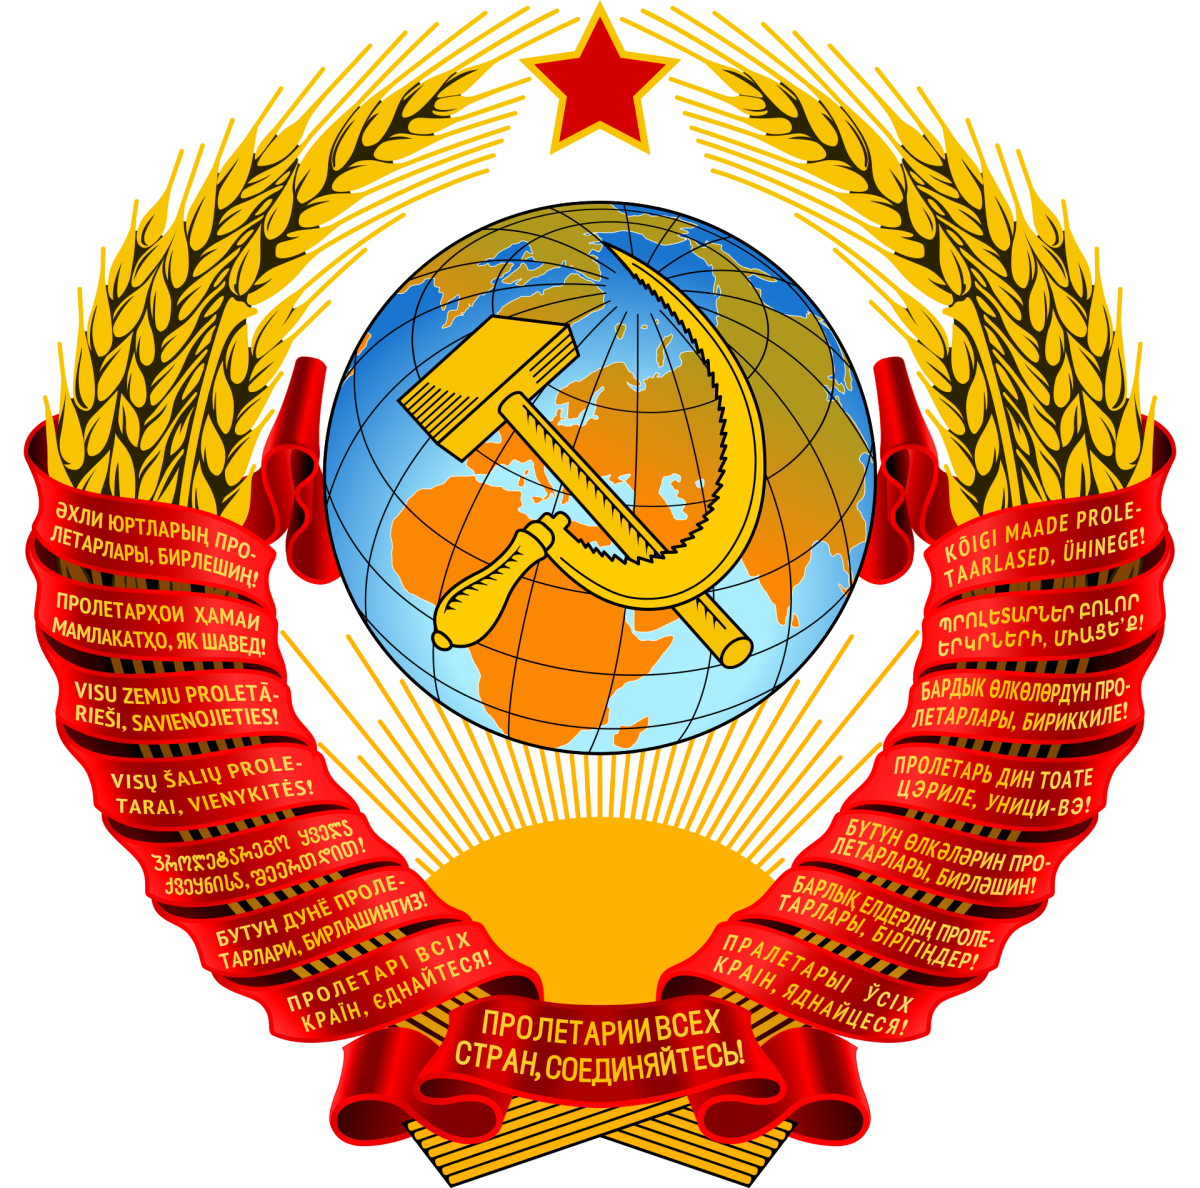 State emblem of the Soviet Union